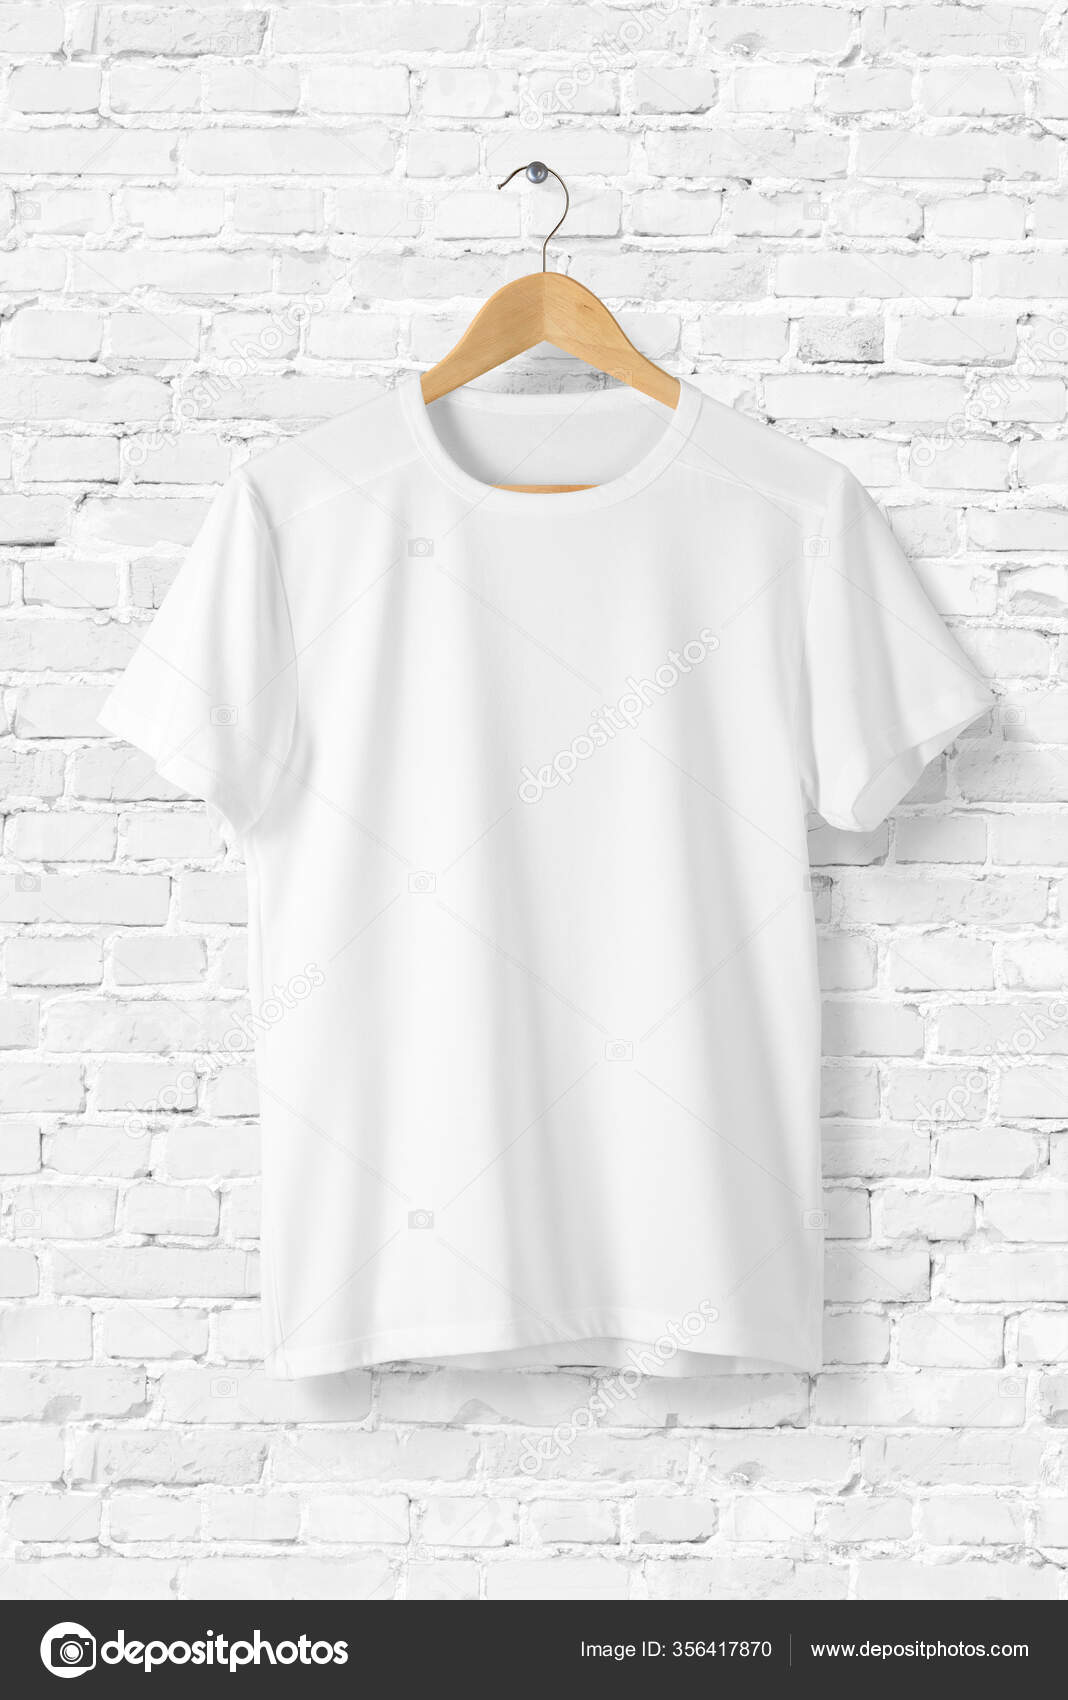 https://st3.depositphotos.com/4778487/35641/i/1600/depositphotos_356417870-stock-photo-blank-white-shirt-mock-wooden.jpg